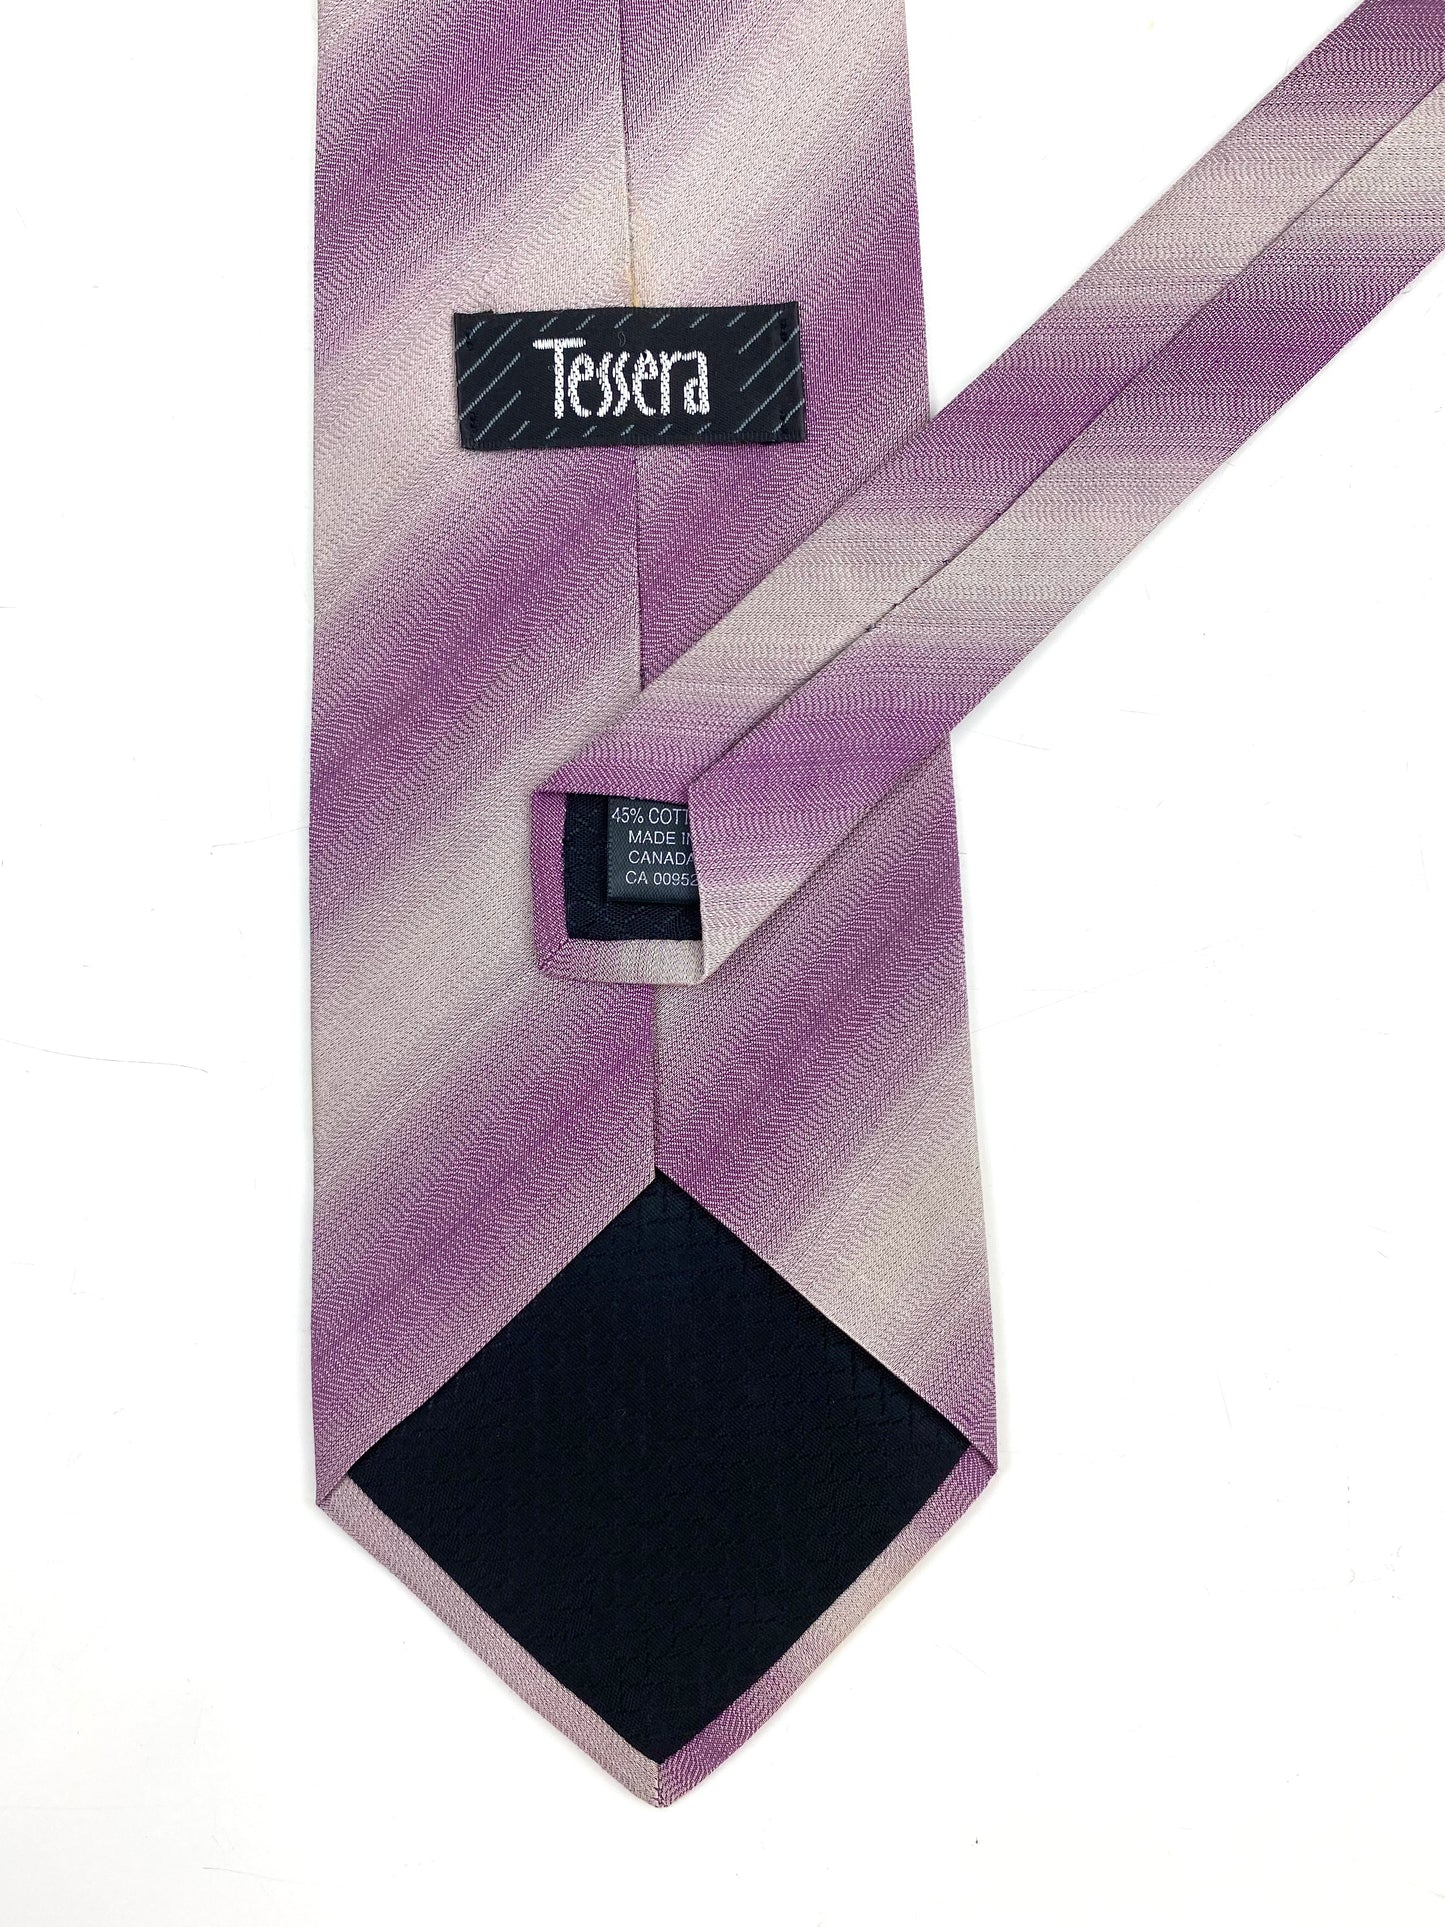 90s Deadstock Silk Necktie, Men's Vintage Purple/ Grey Diagonal Stripe Pattern Tie, NOS